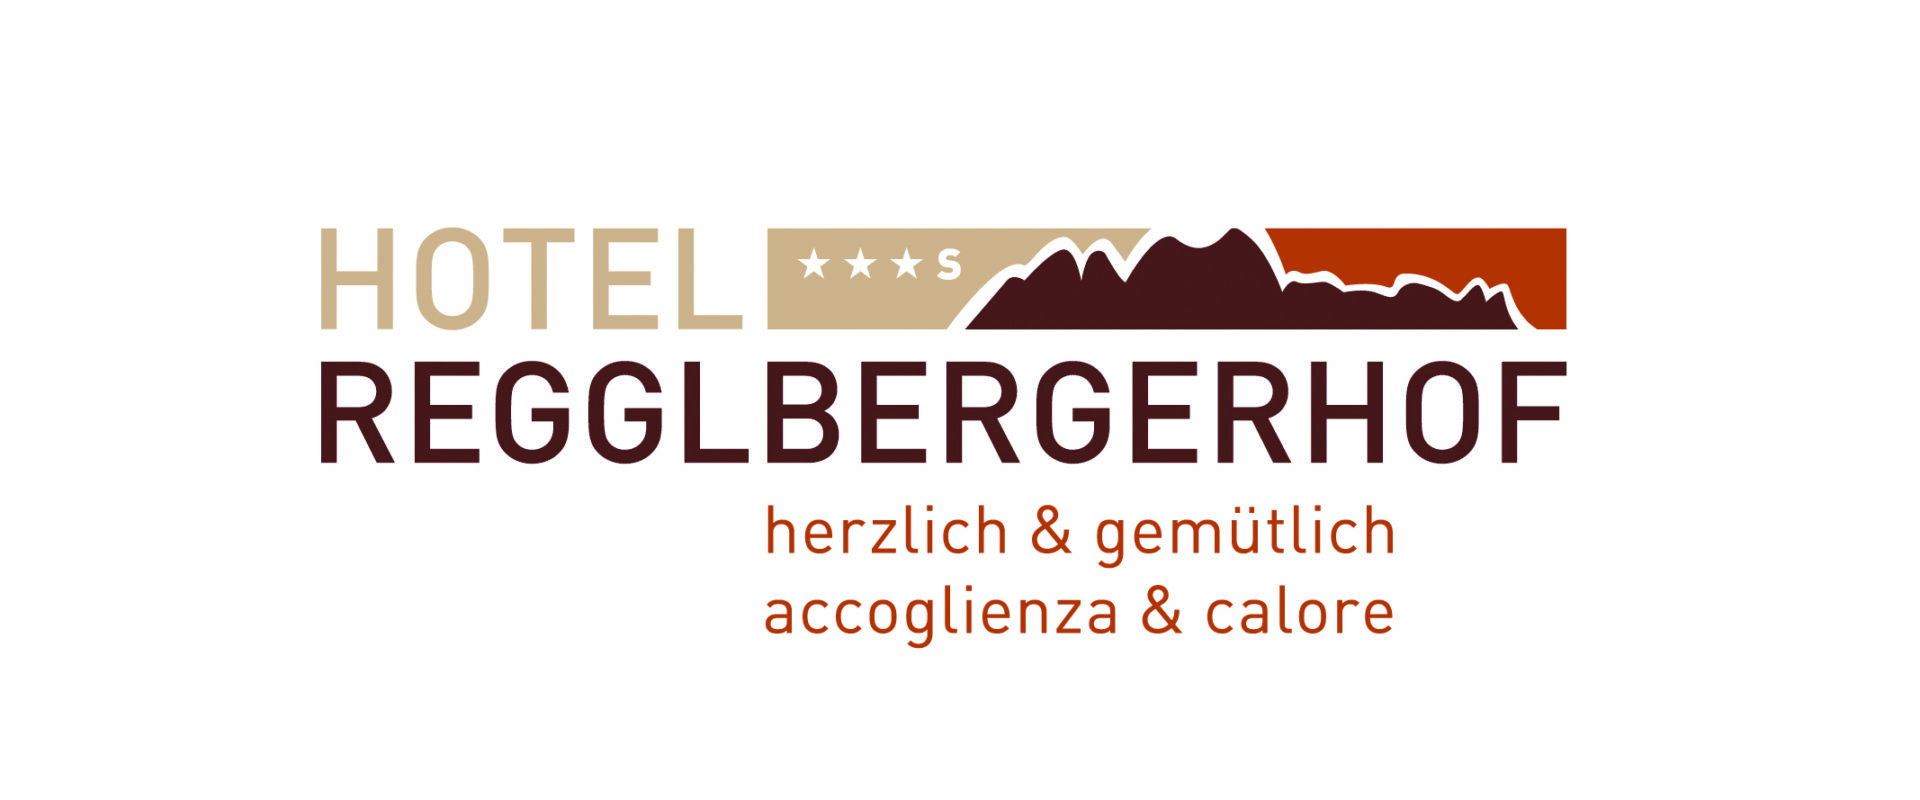 Regglbergerhof logo